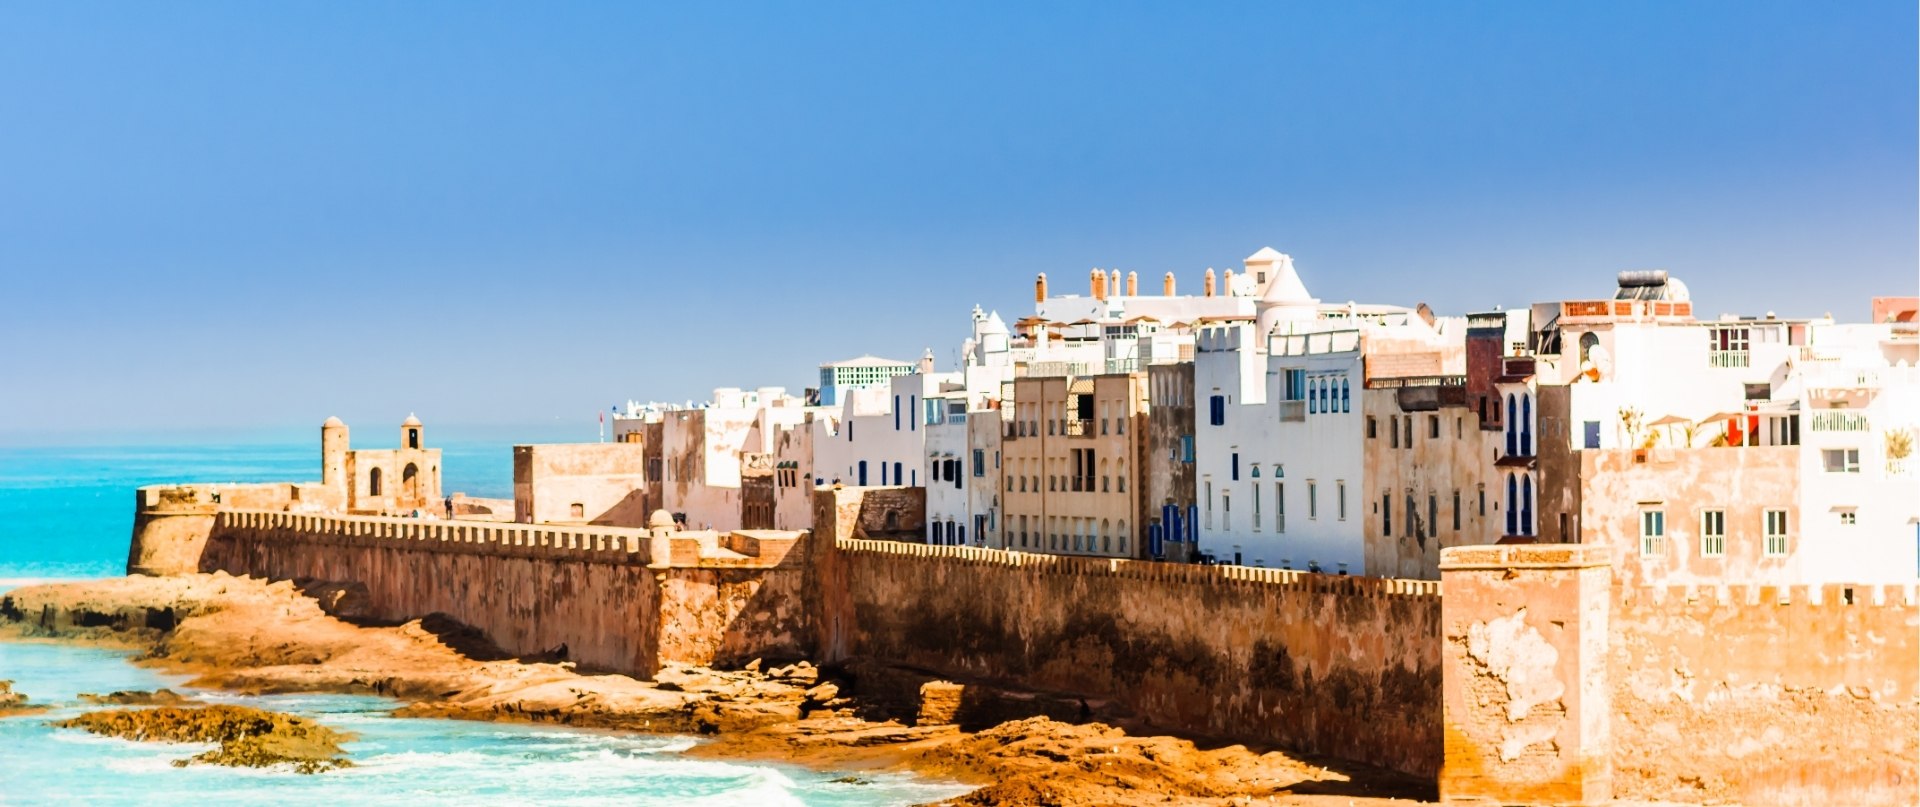 Pacote de viagens para Marrocos